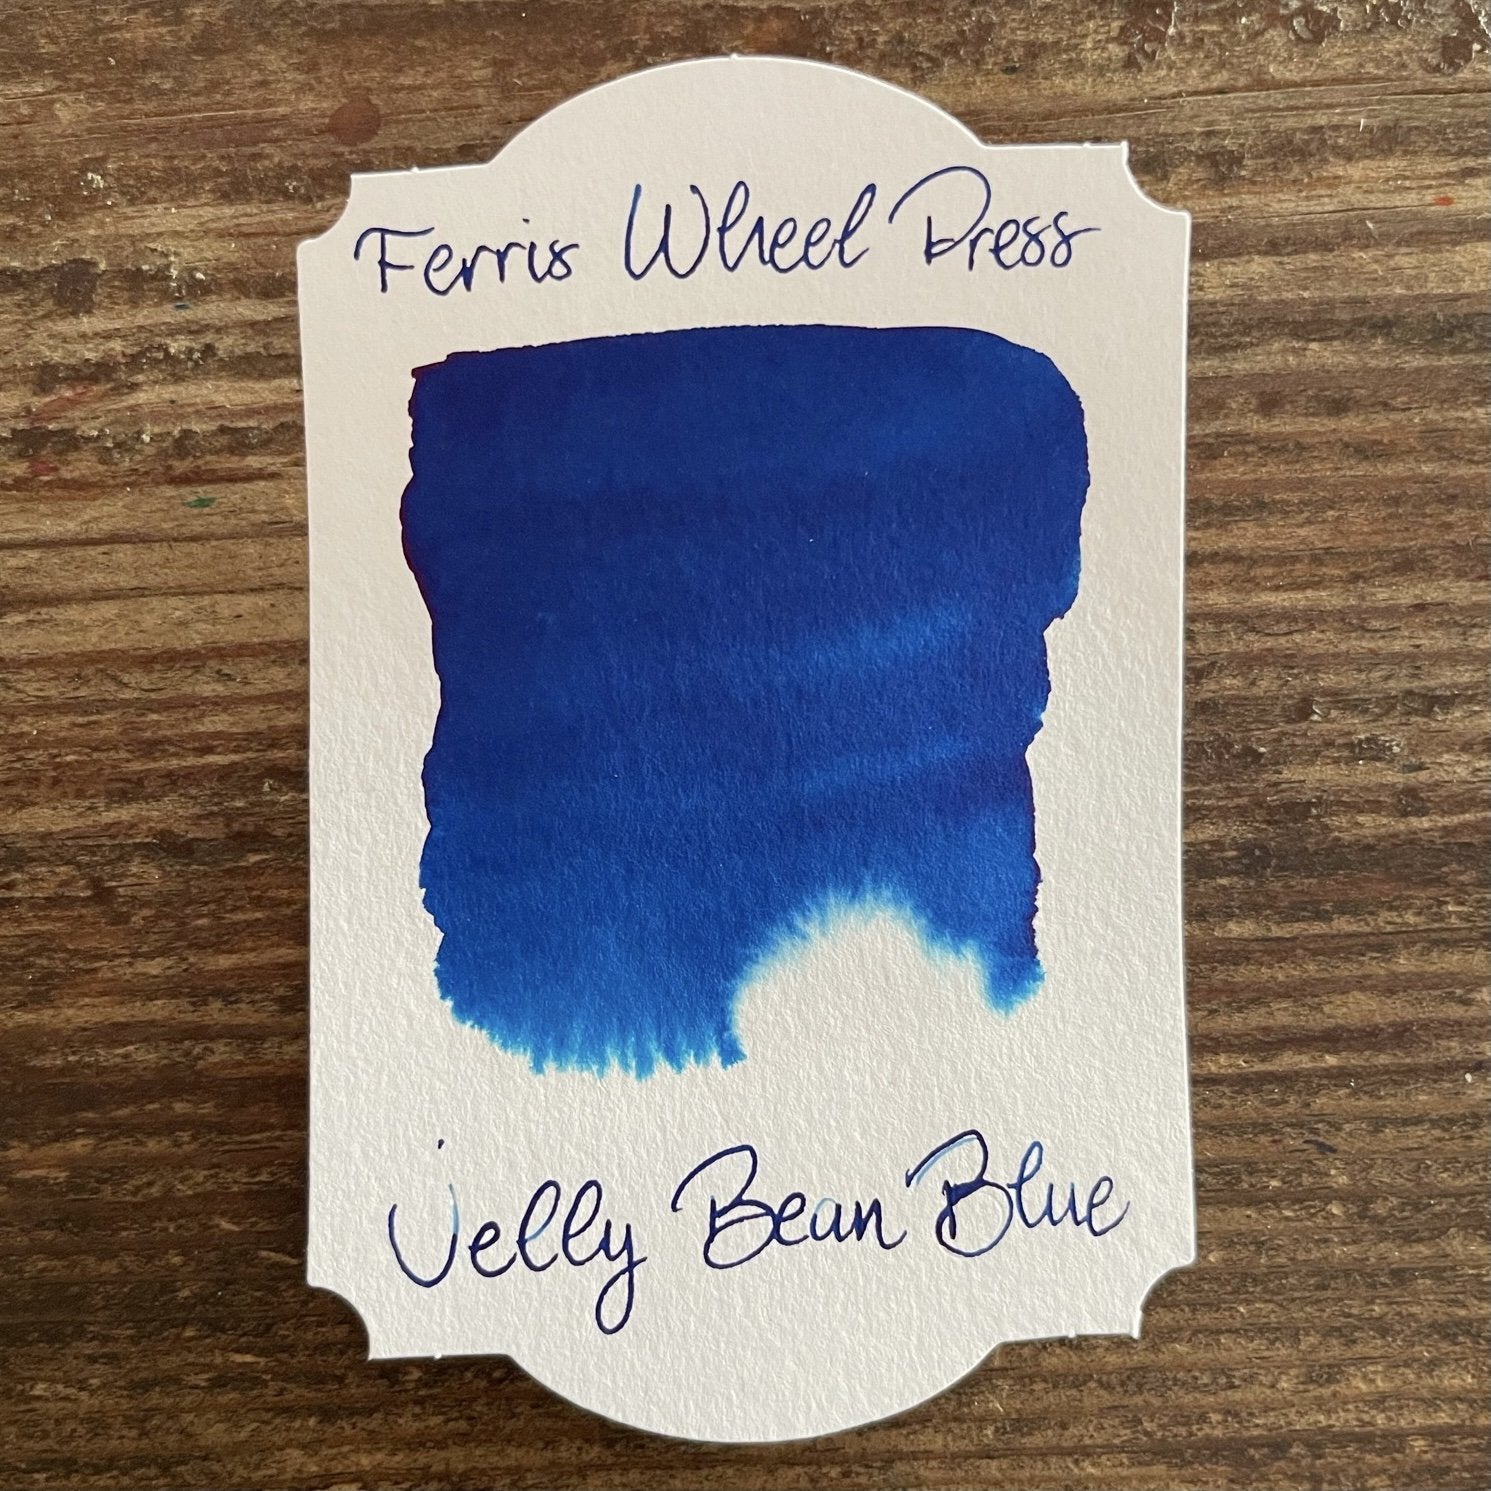 Ferris Wheel Press Storied Blue - Ink Sample - The Goulet Pen Company